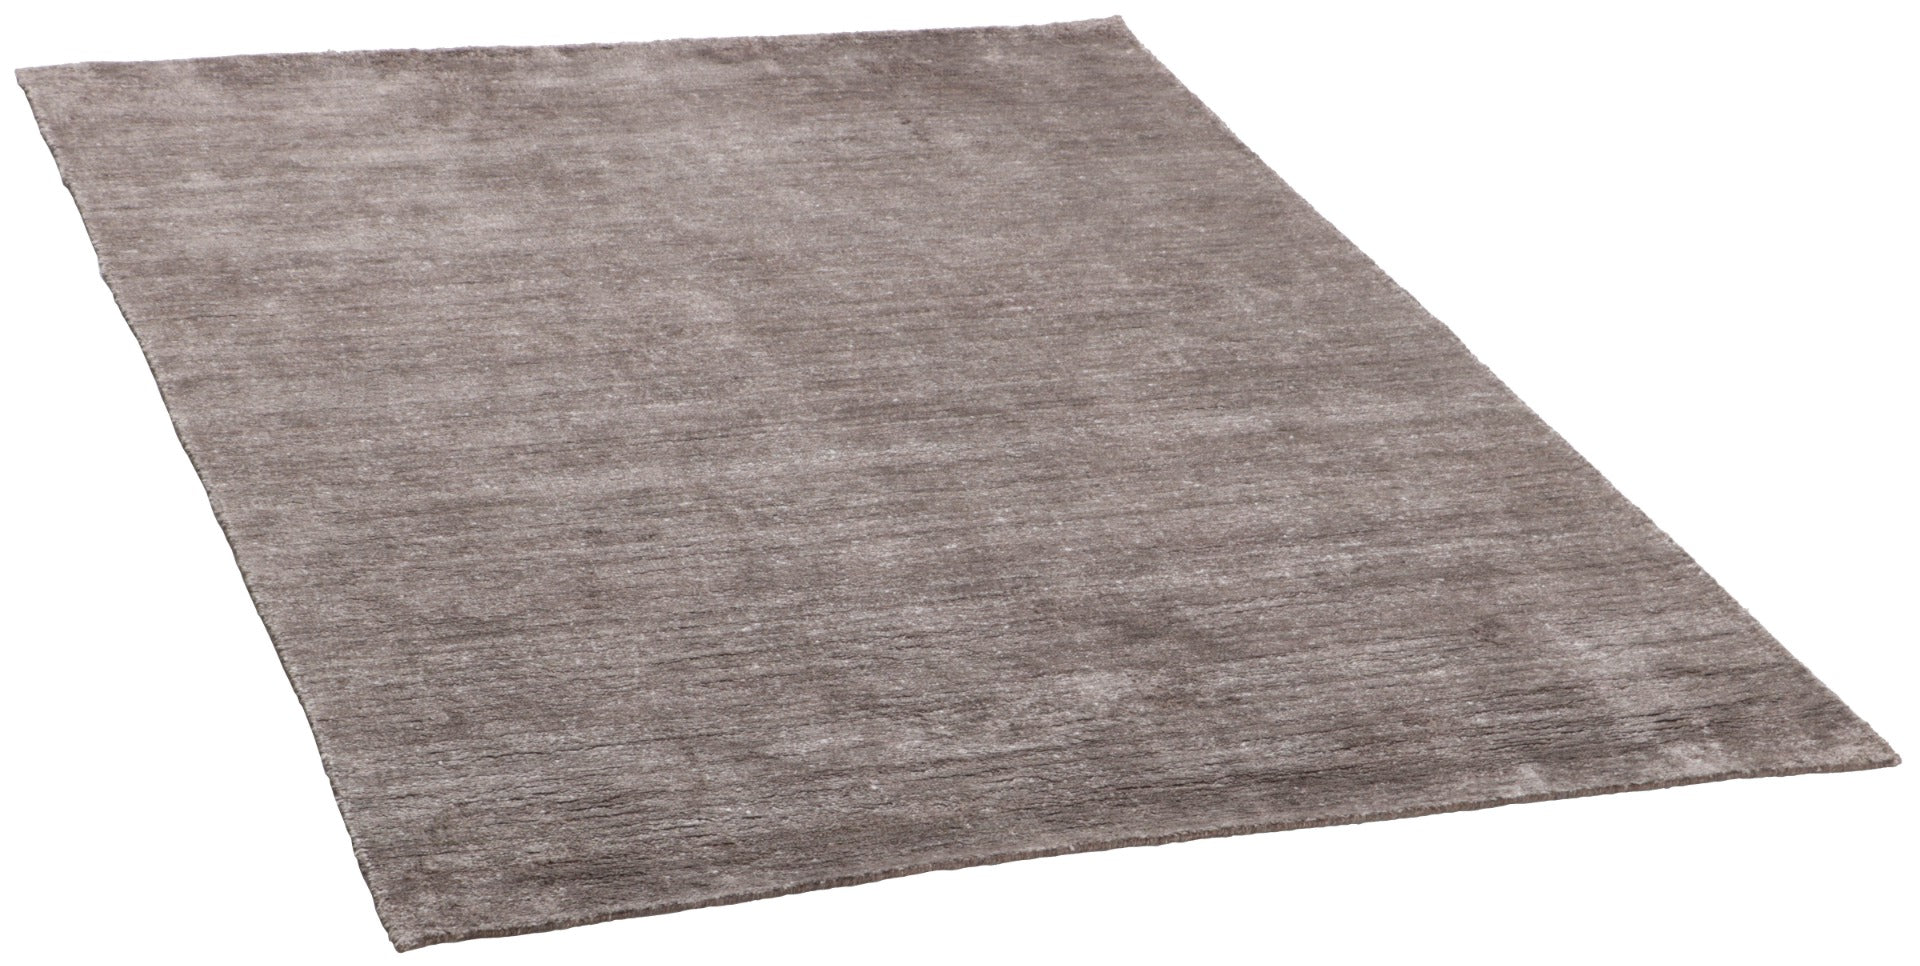 Plain brown viscose rug